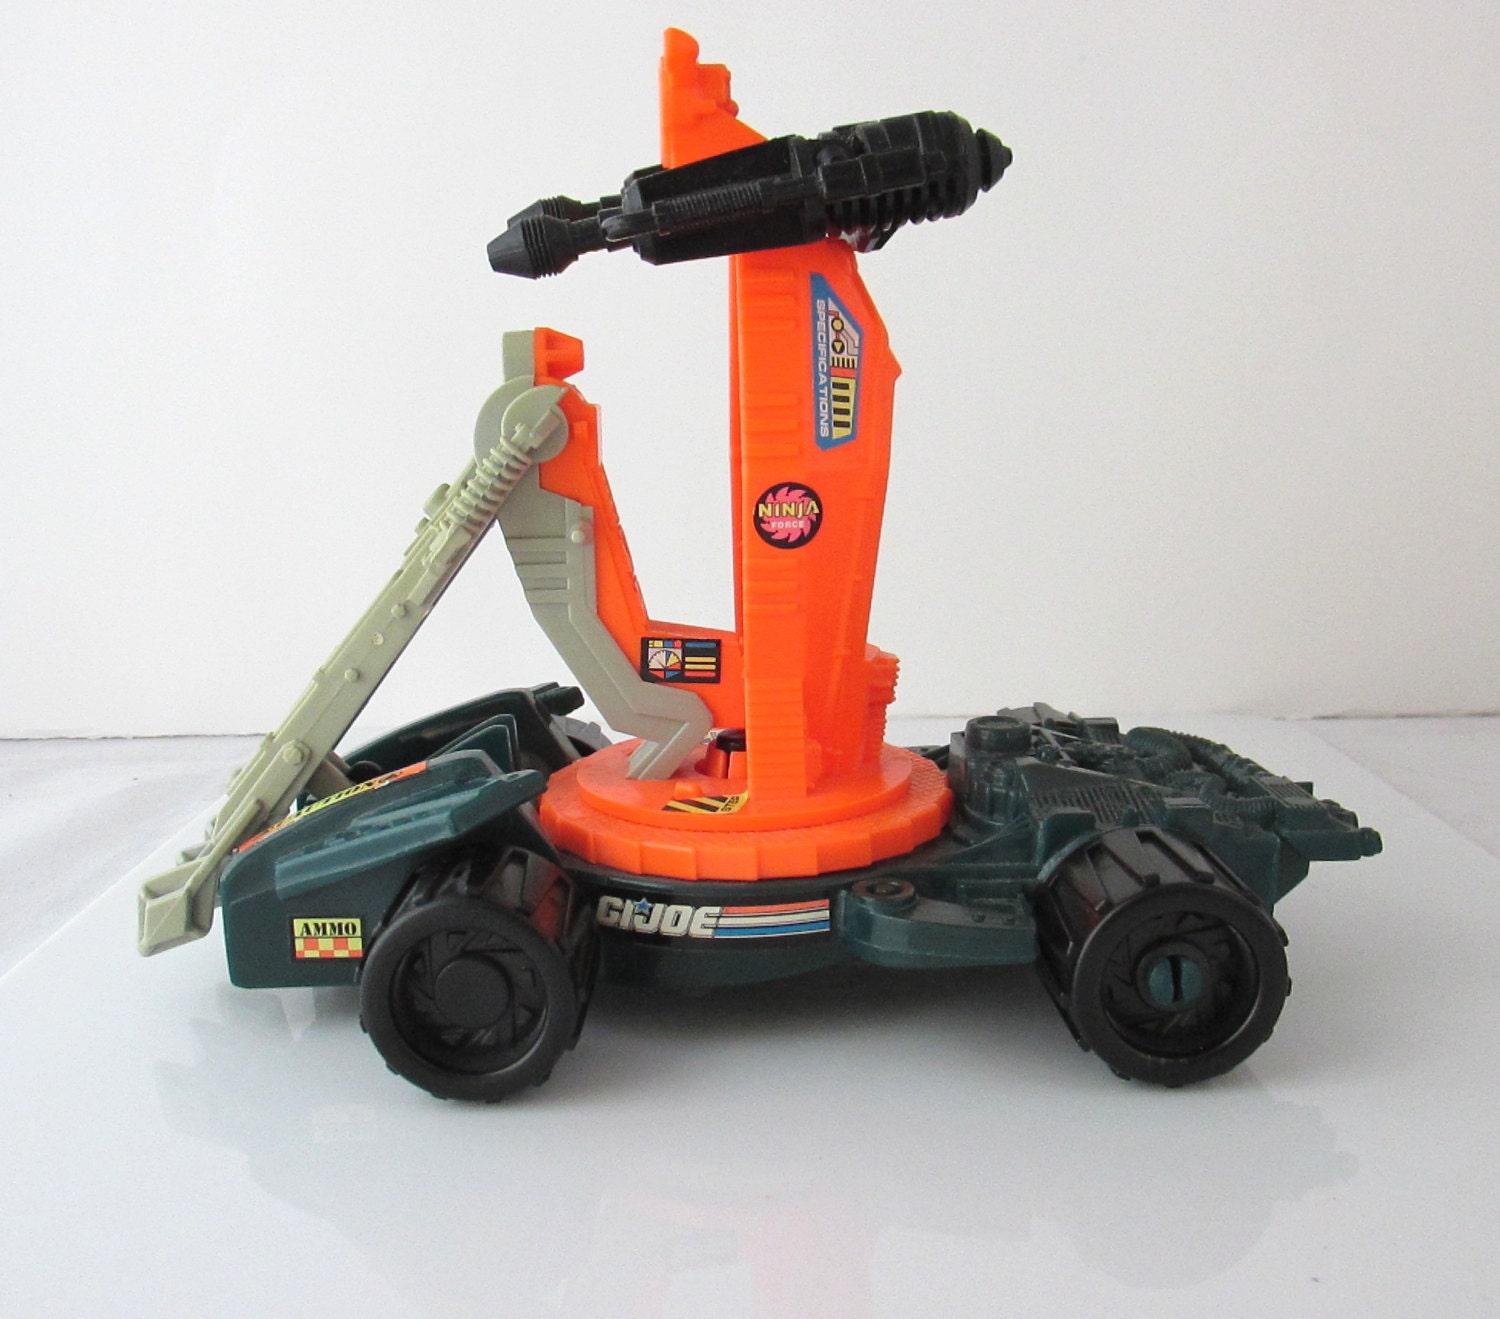 Gi Joe Ninja Force Vintage Pile Driver Toy By Saturdaymorningm 0809